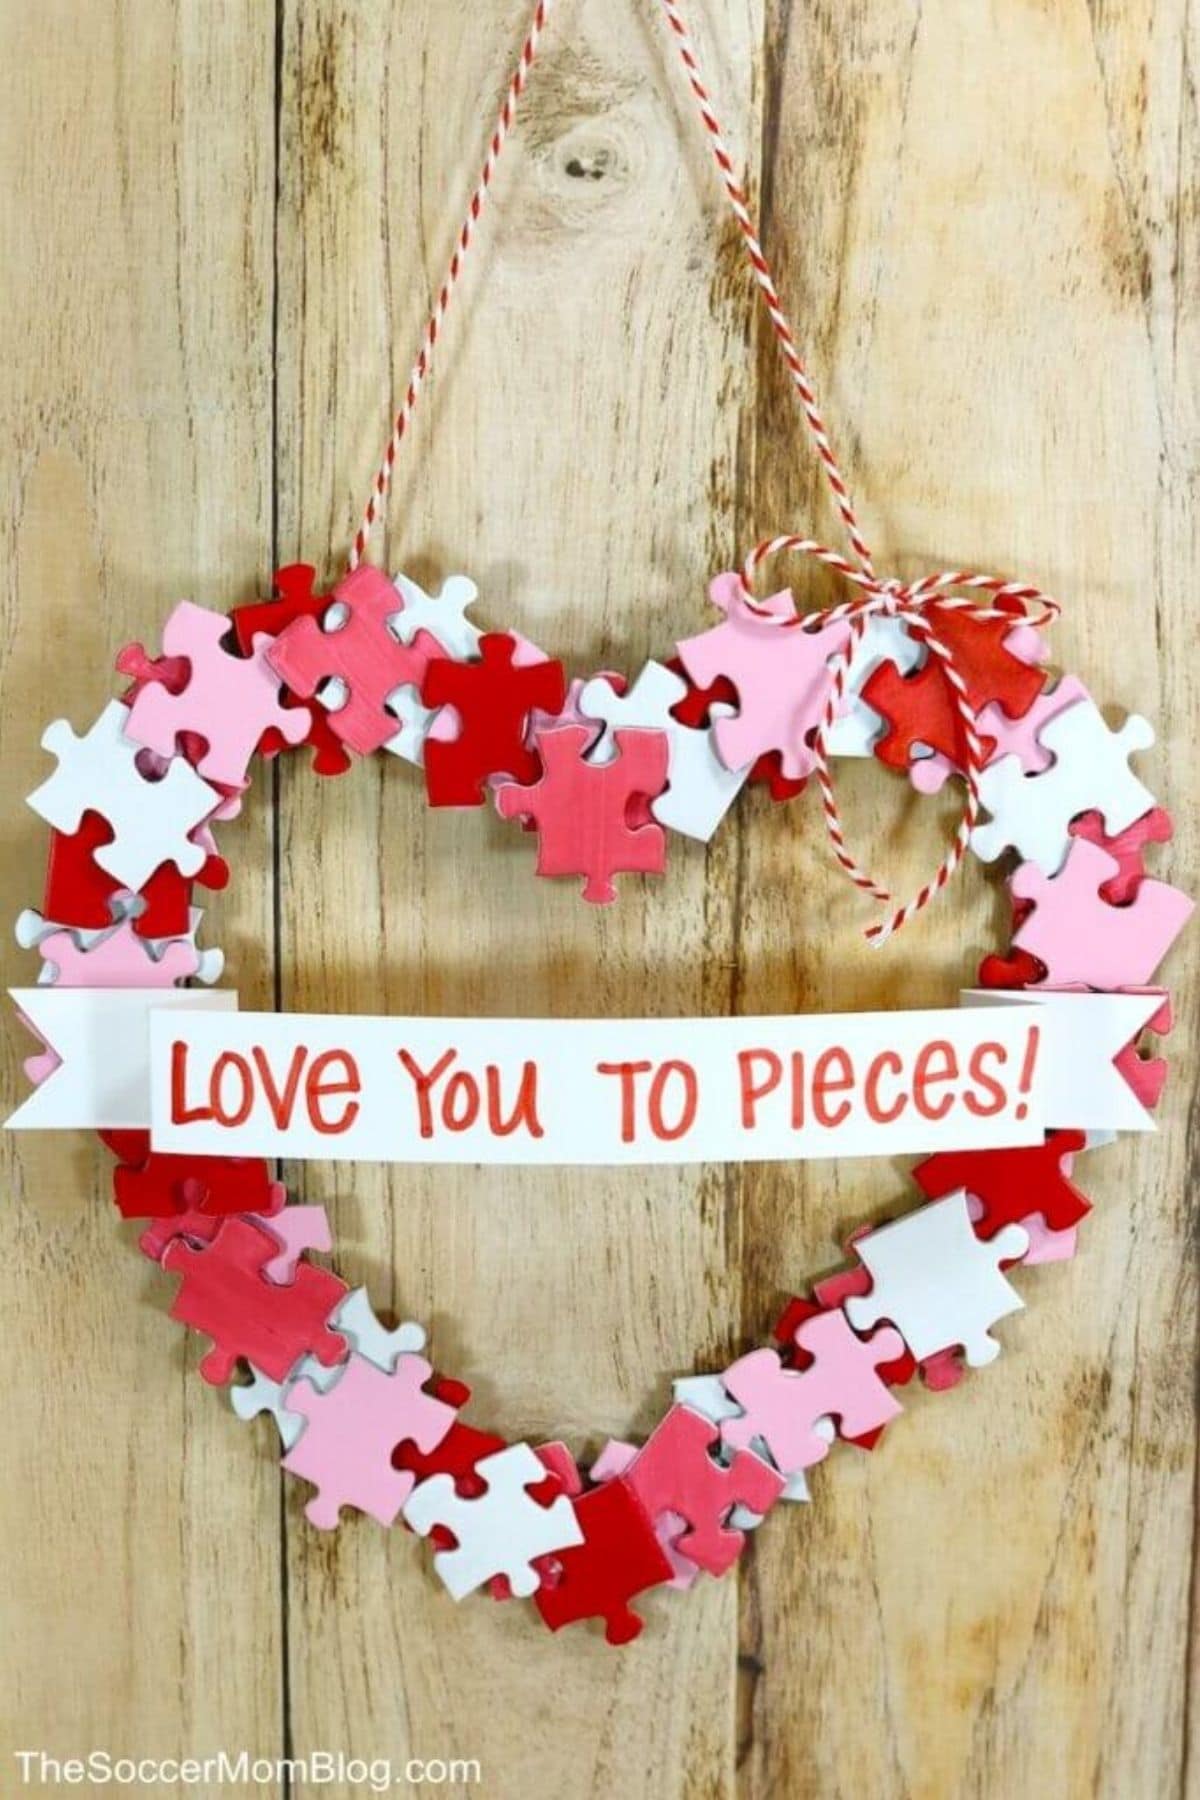 Puzzle piece heart wreath